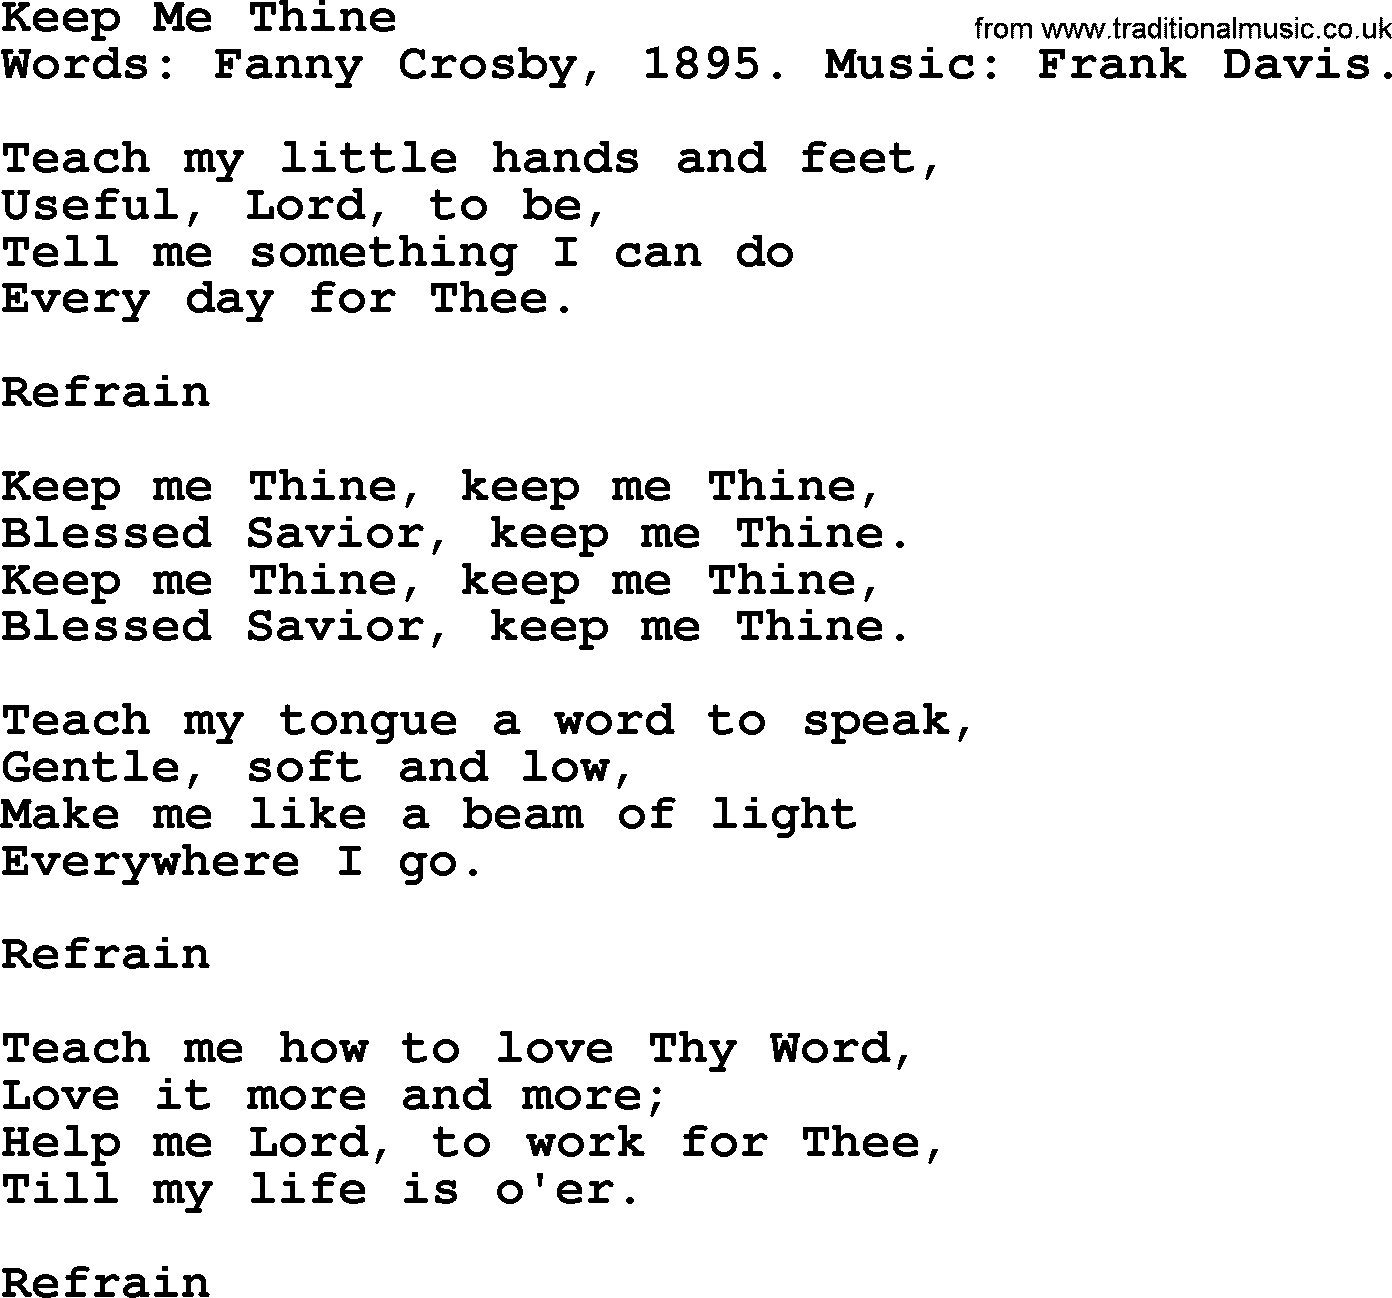 Fanny Crosby song: Keep Me Thine, lyrics